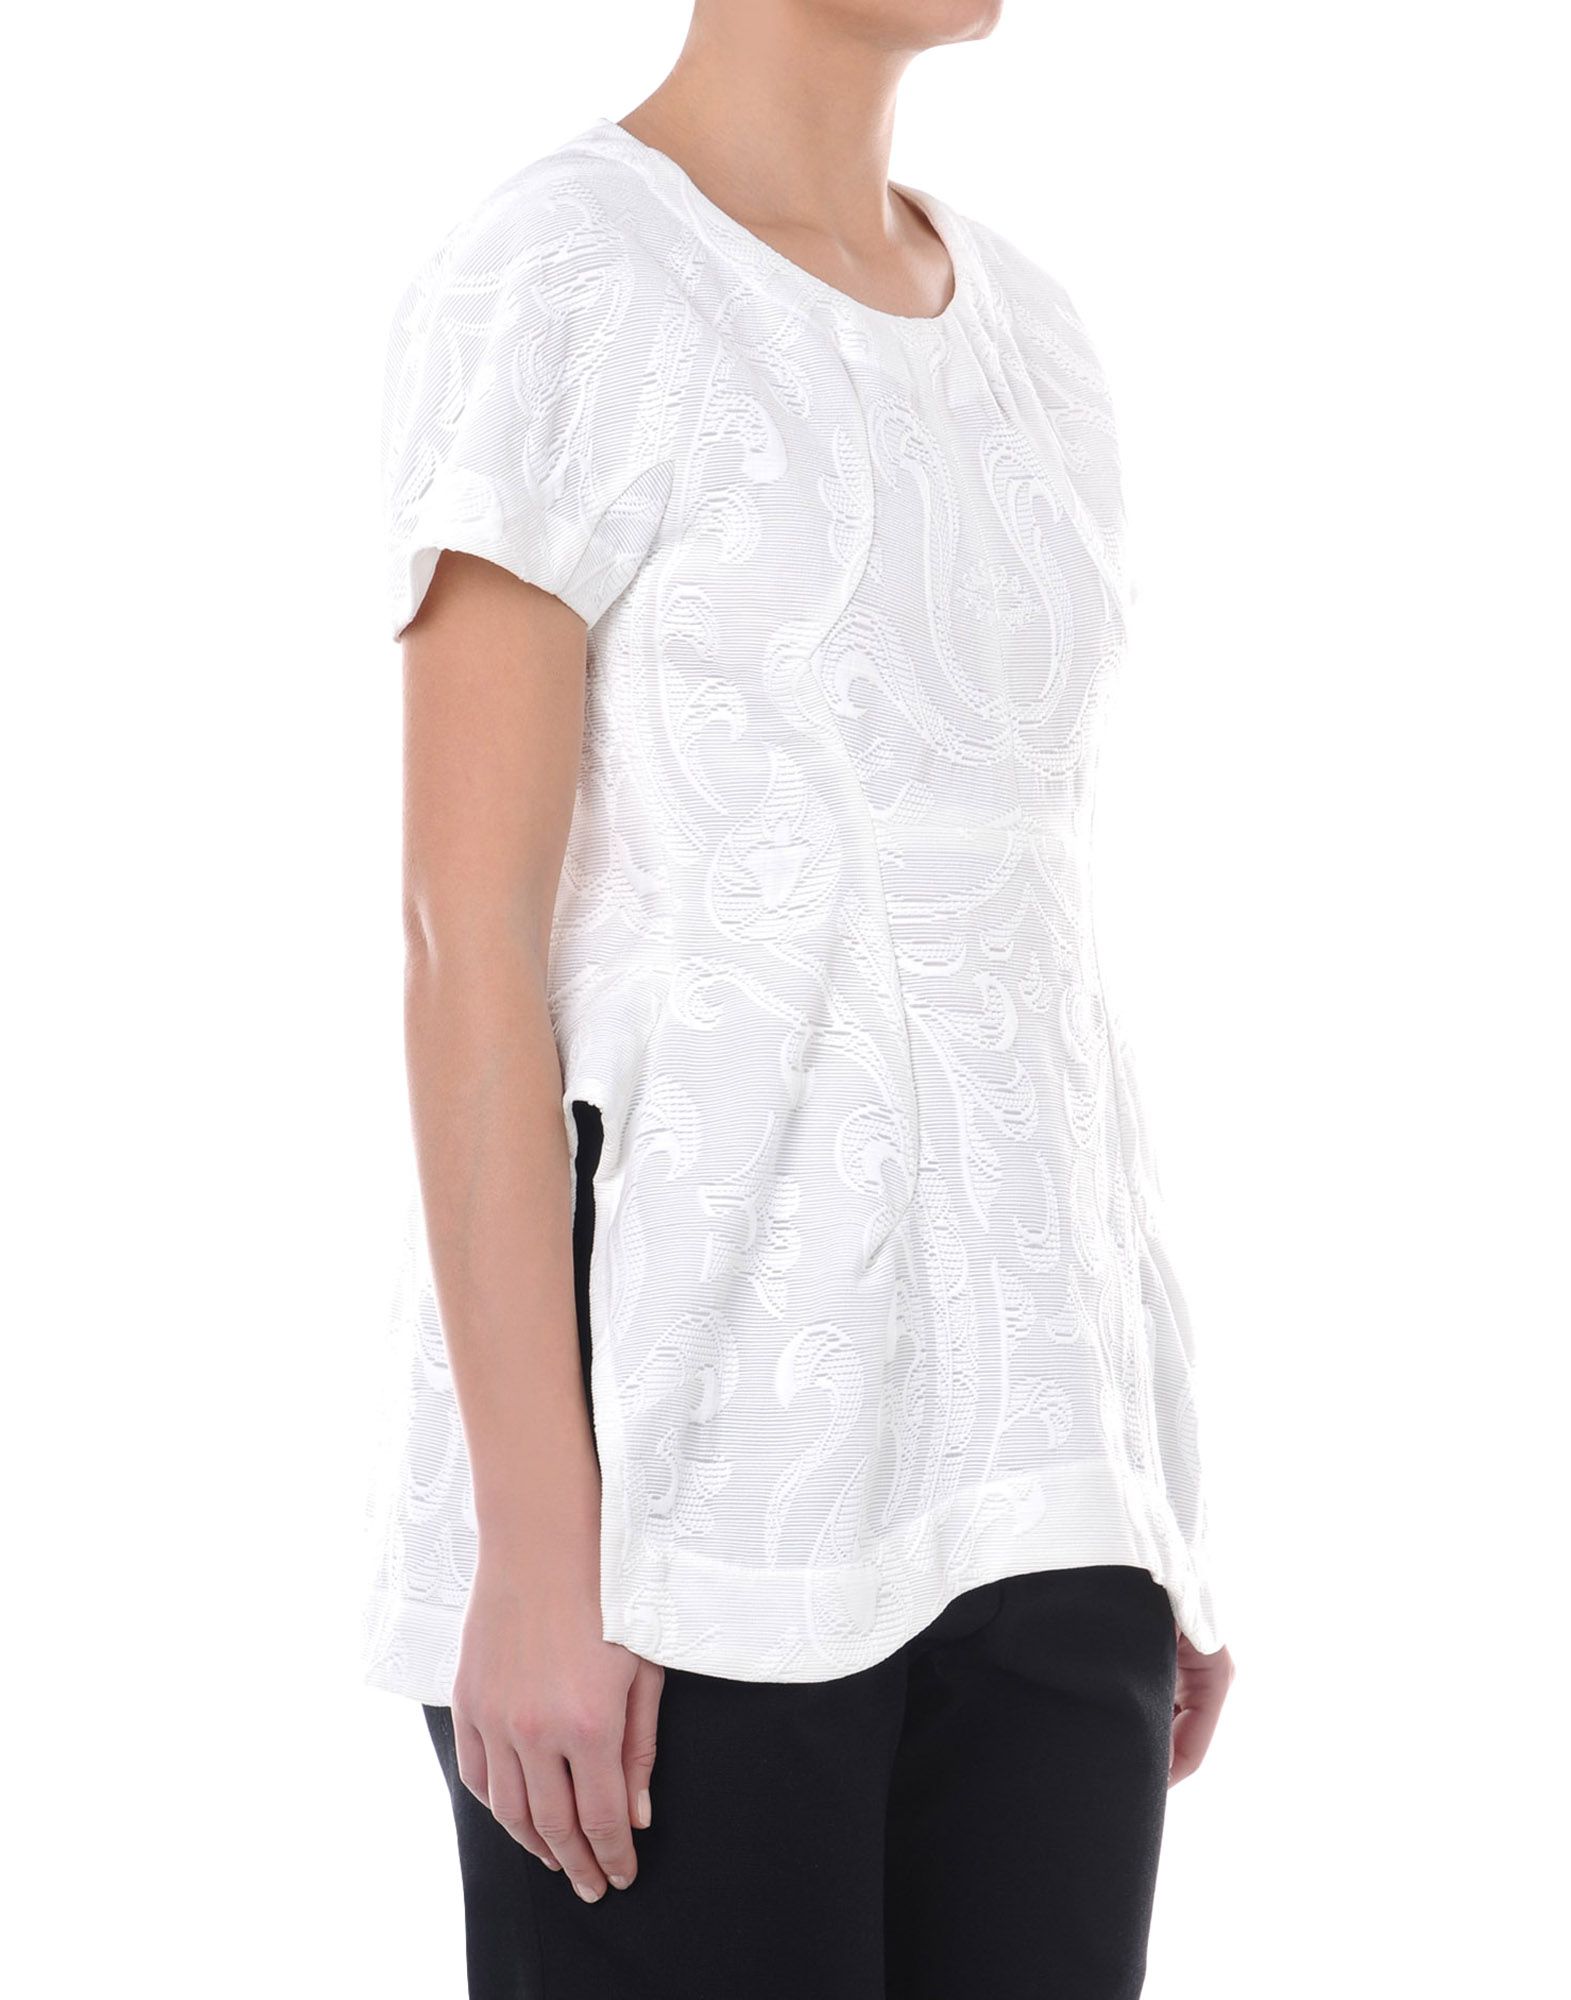 Top Women - T-shirts & tops Women on Jil Sander Online Store